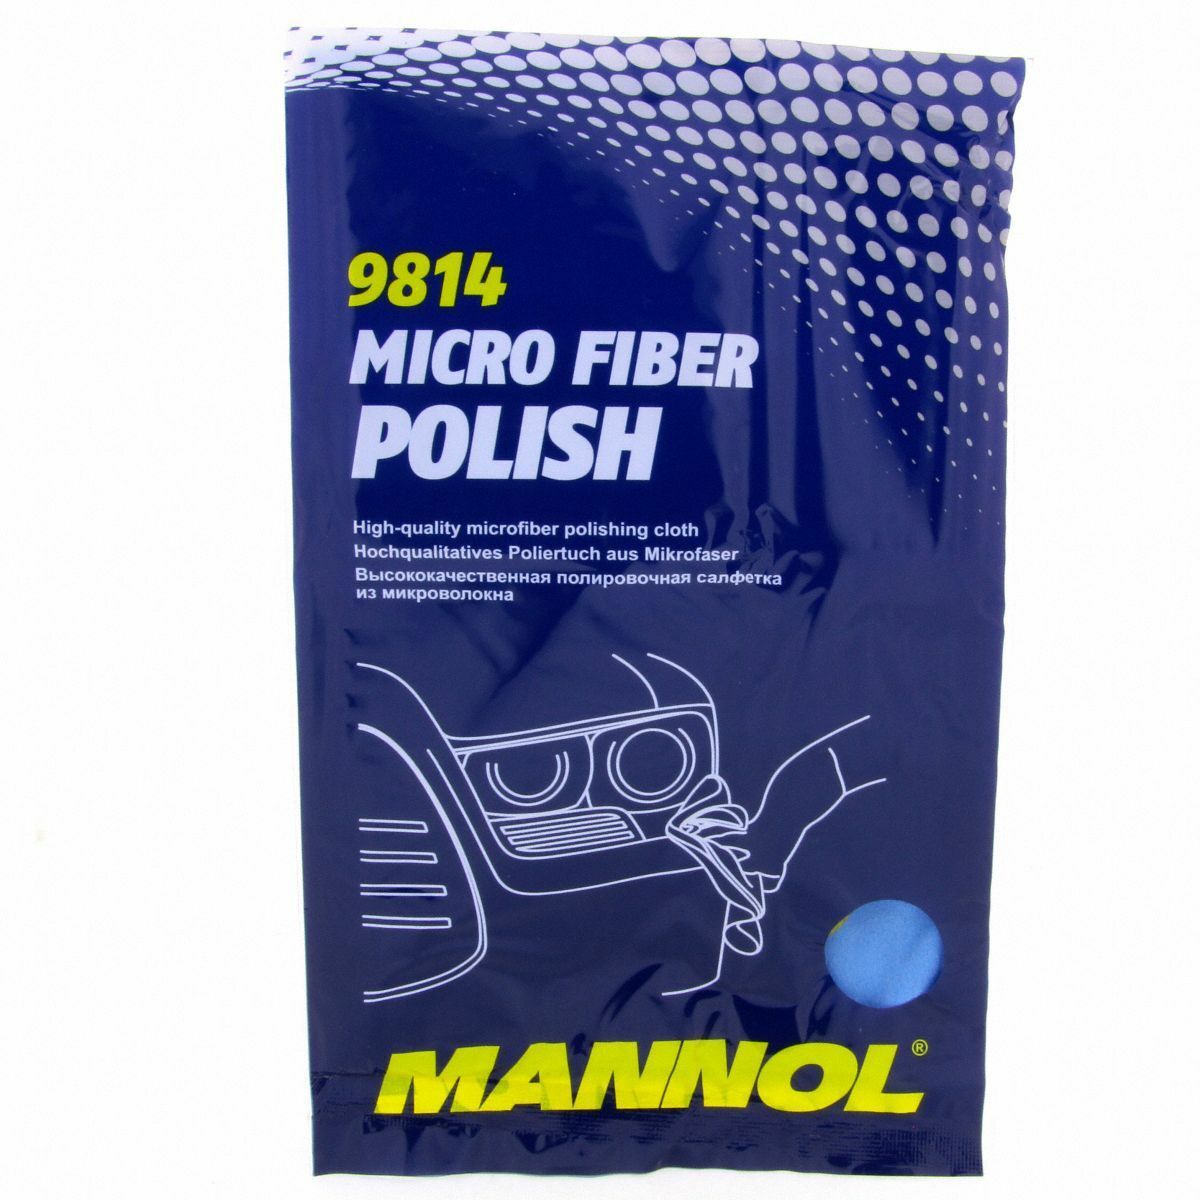 3x MANNOL 9814 Micro Fiber Polish Faserpolitur Politur Lackoberfläche